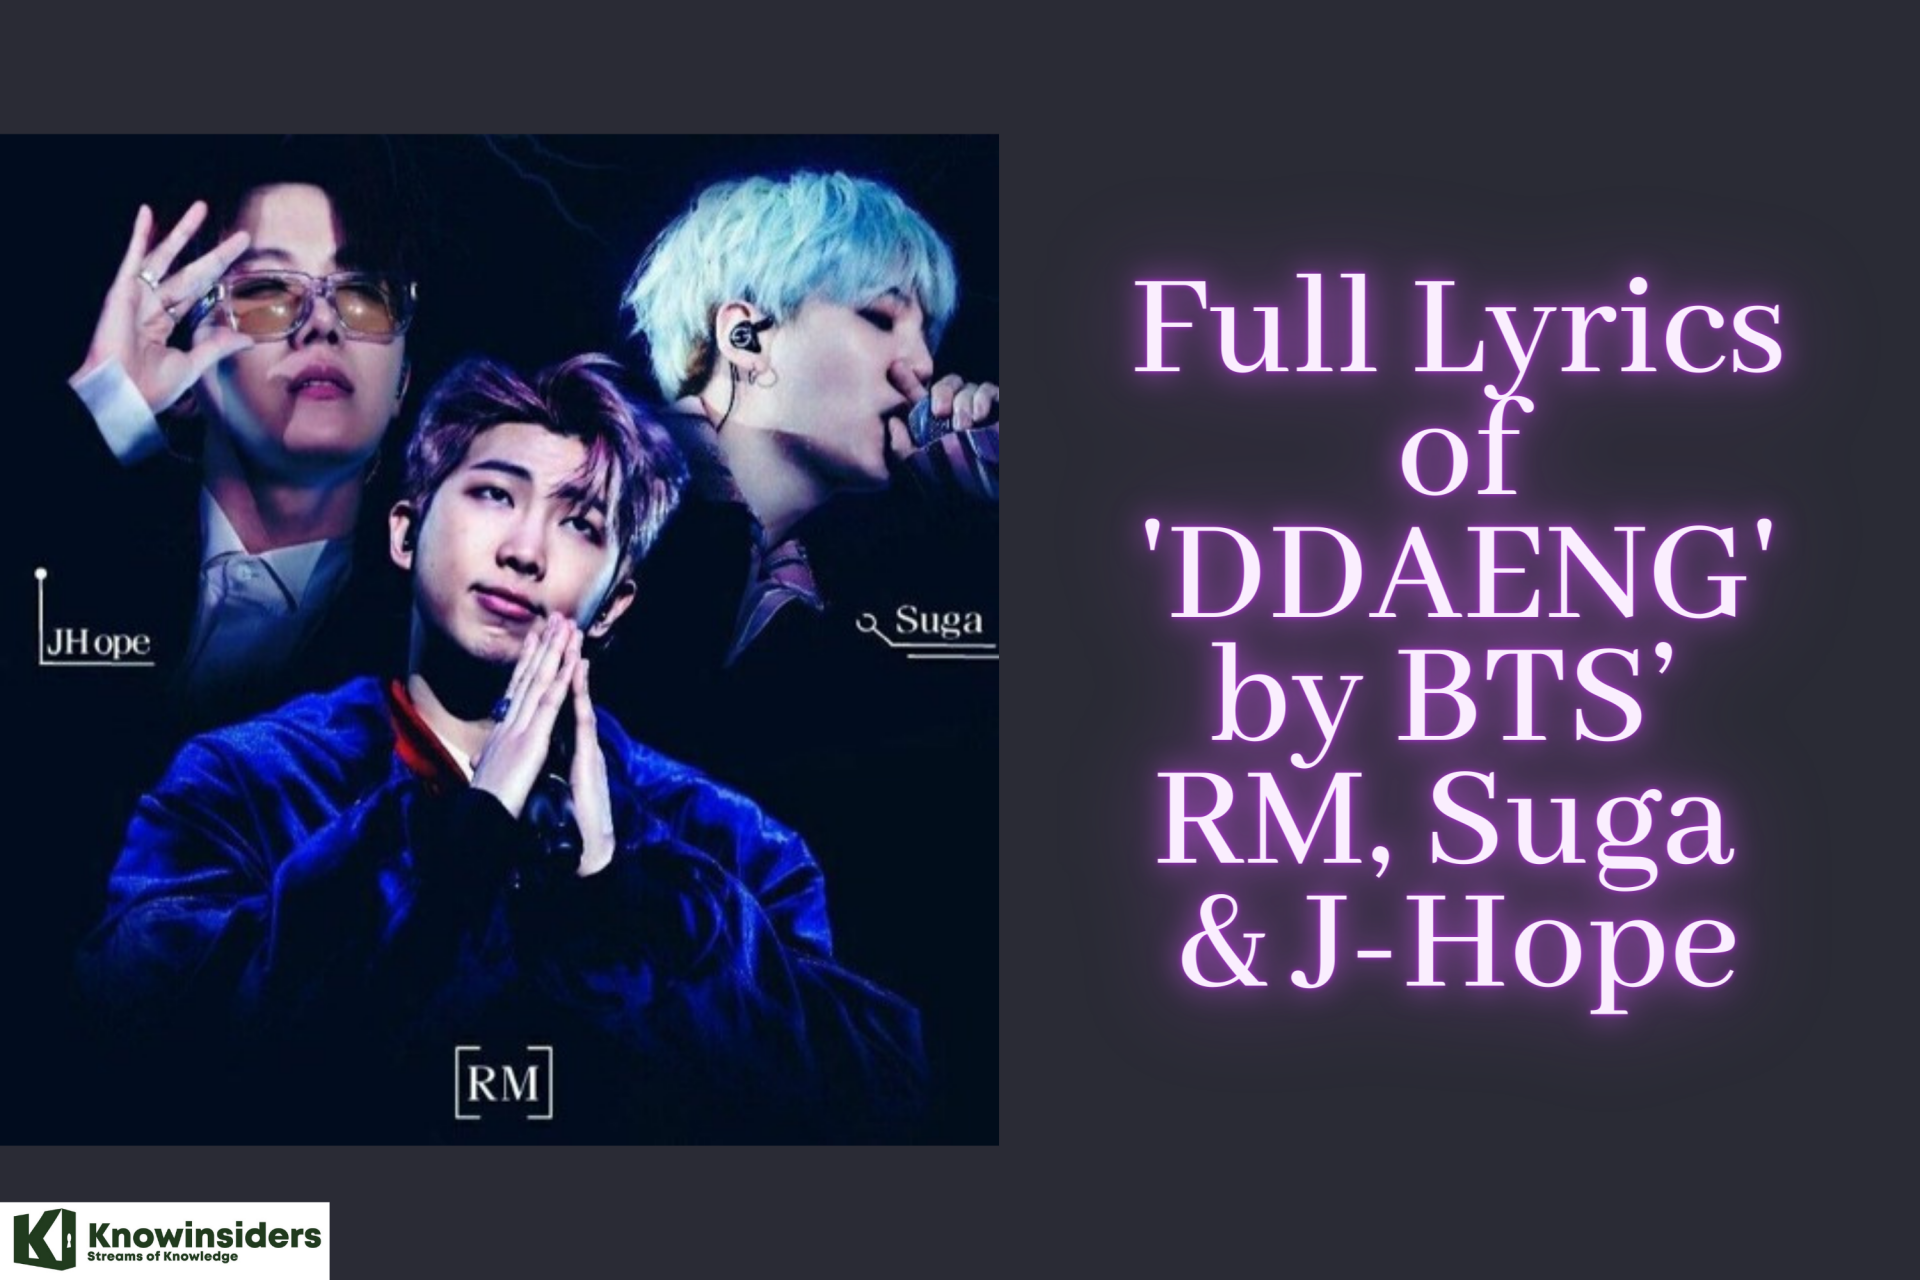 Full Lyrics of 'DDAENG' by BTS’ RM, Suga & J-Hope - Korean and English